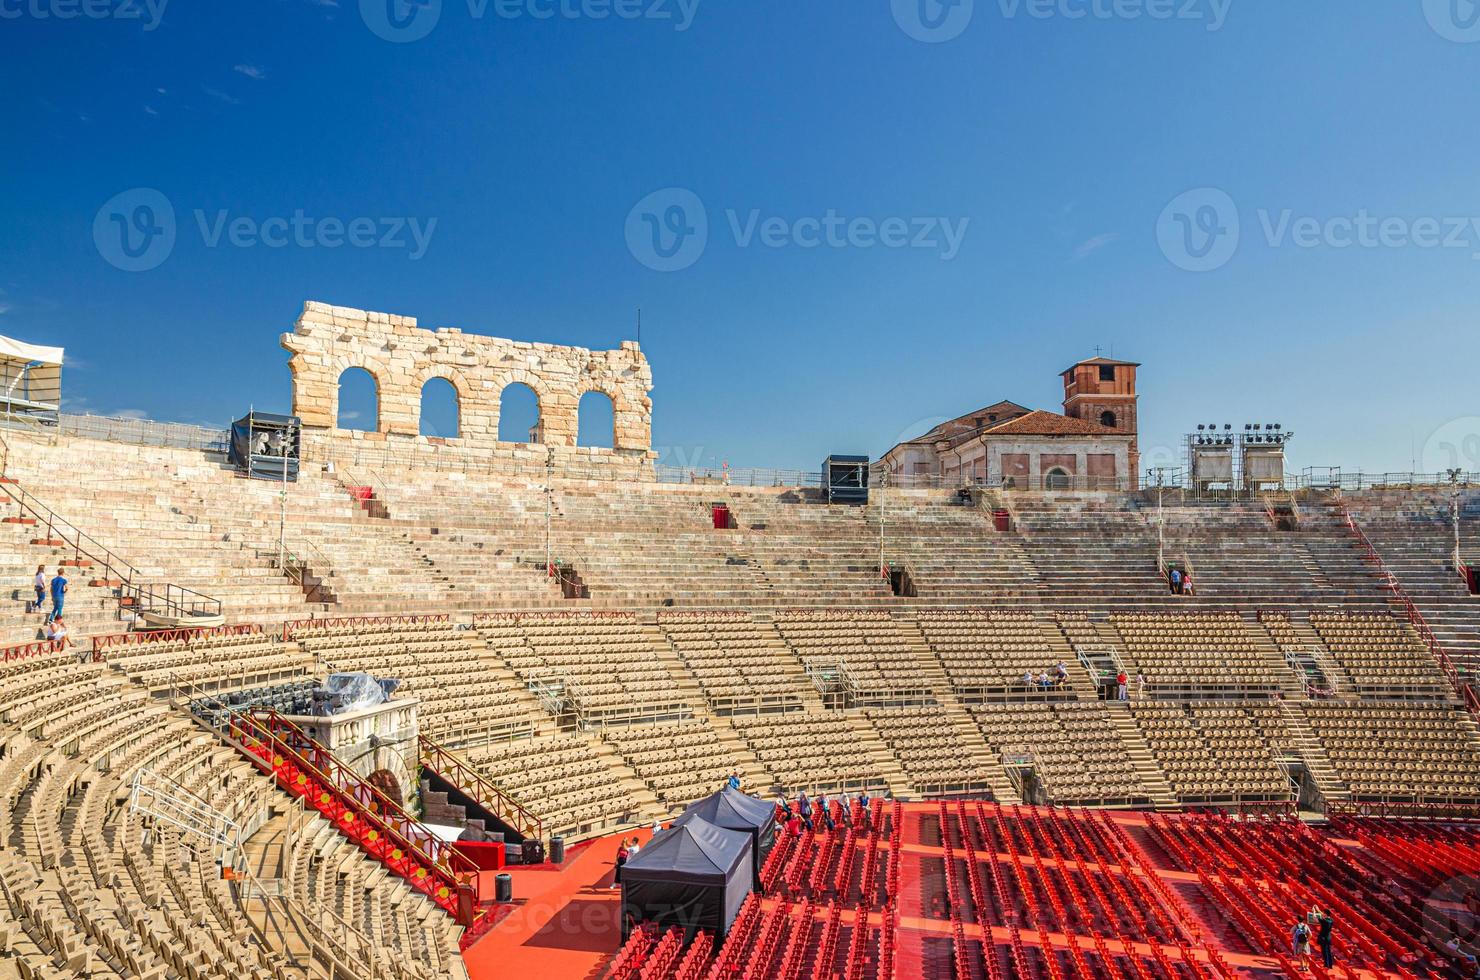 de verona arena interieur binnenaanzicht met stenen stands. Romeinse amfitheaterarena foto